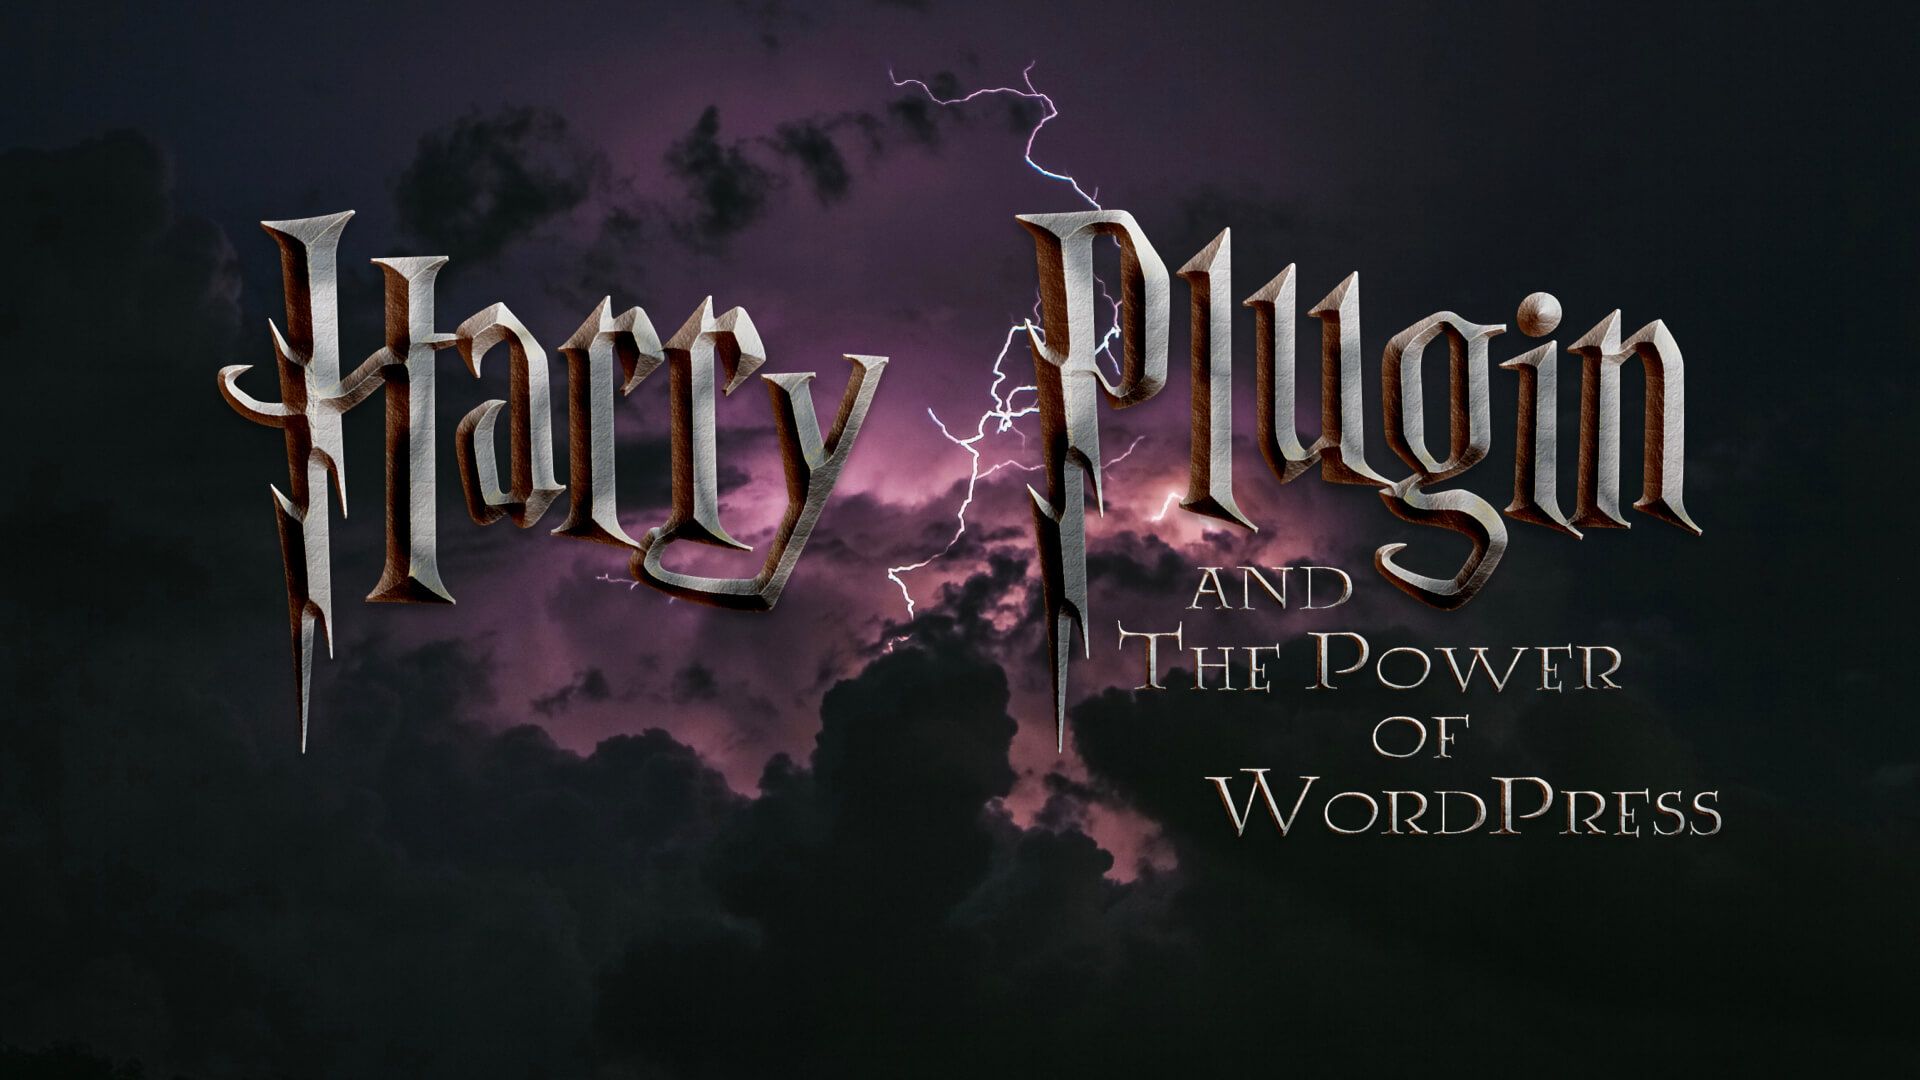 "Harry Plugin & The Power of WordPress" written in the style of Harry Potter